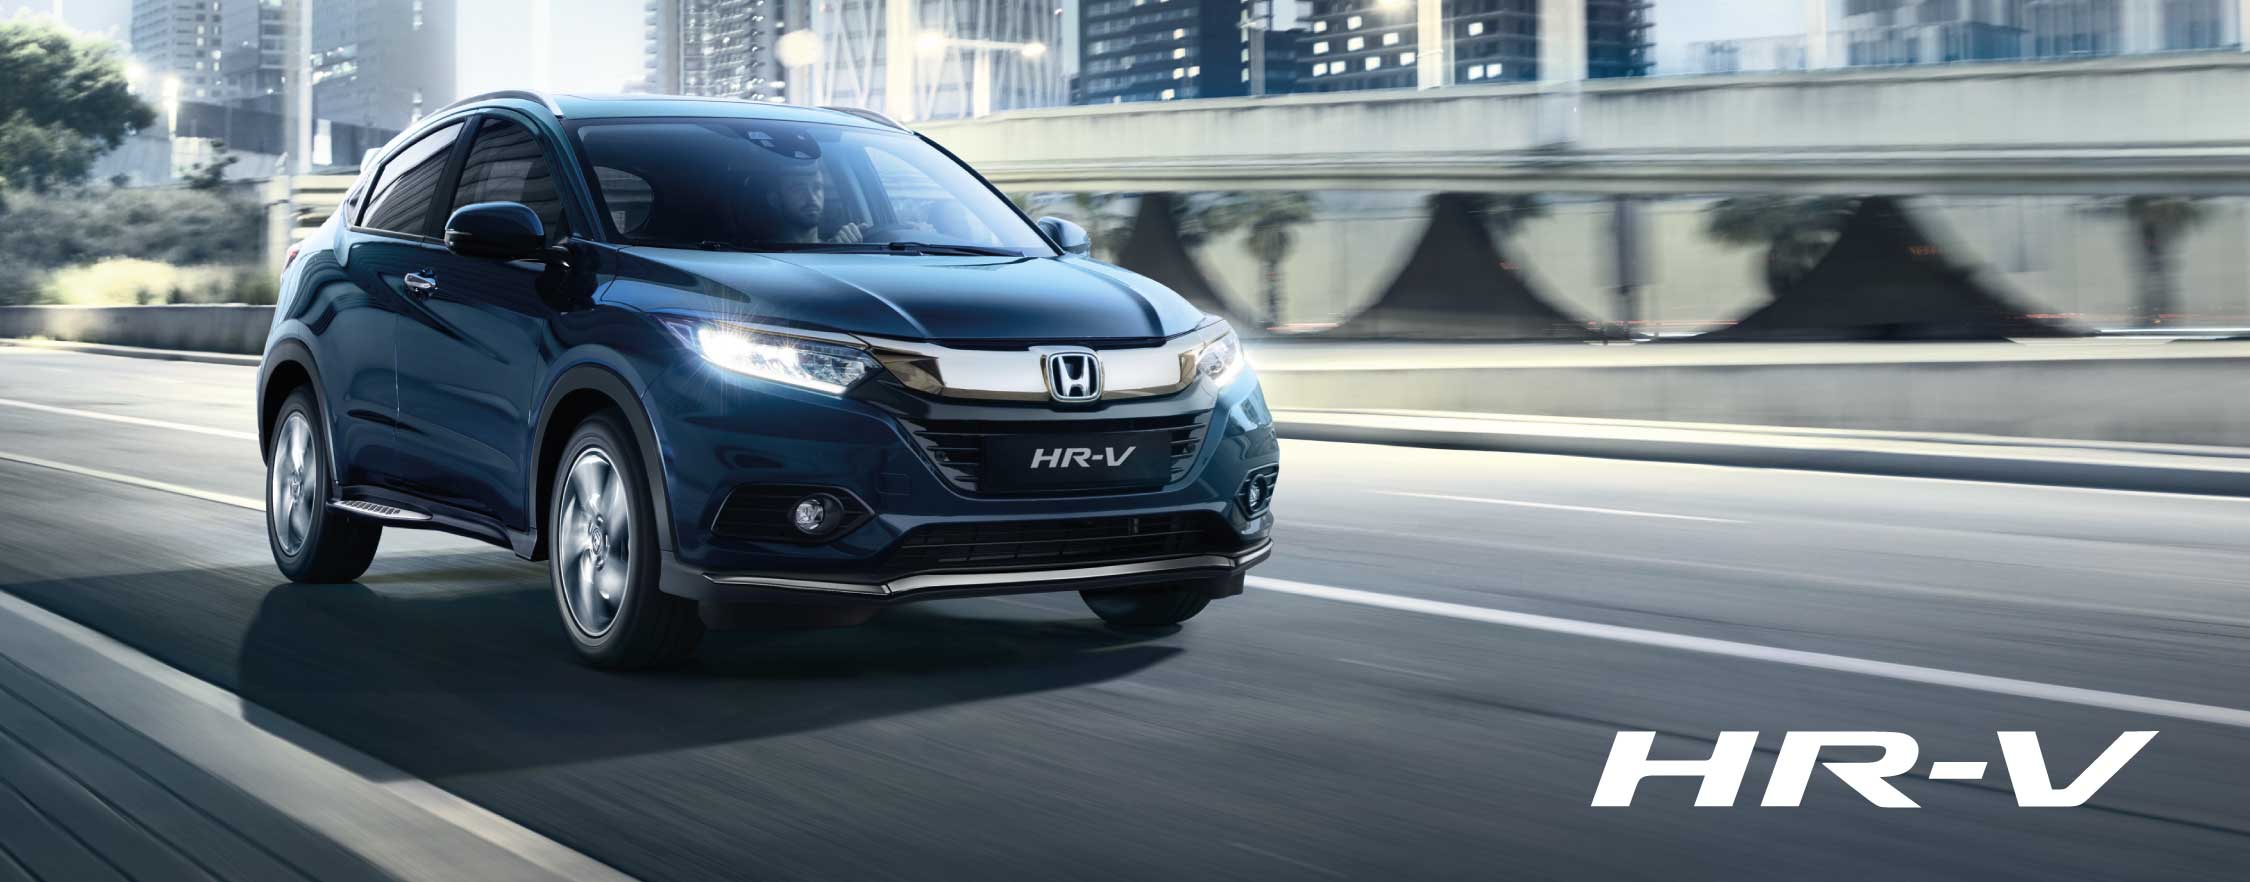 2020 Honda HR V changes 2020 Honda HR V Release Date